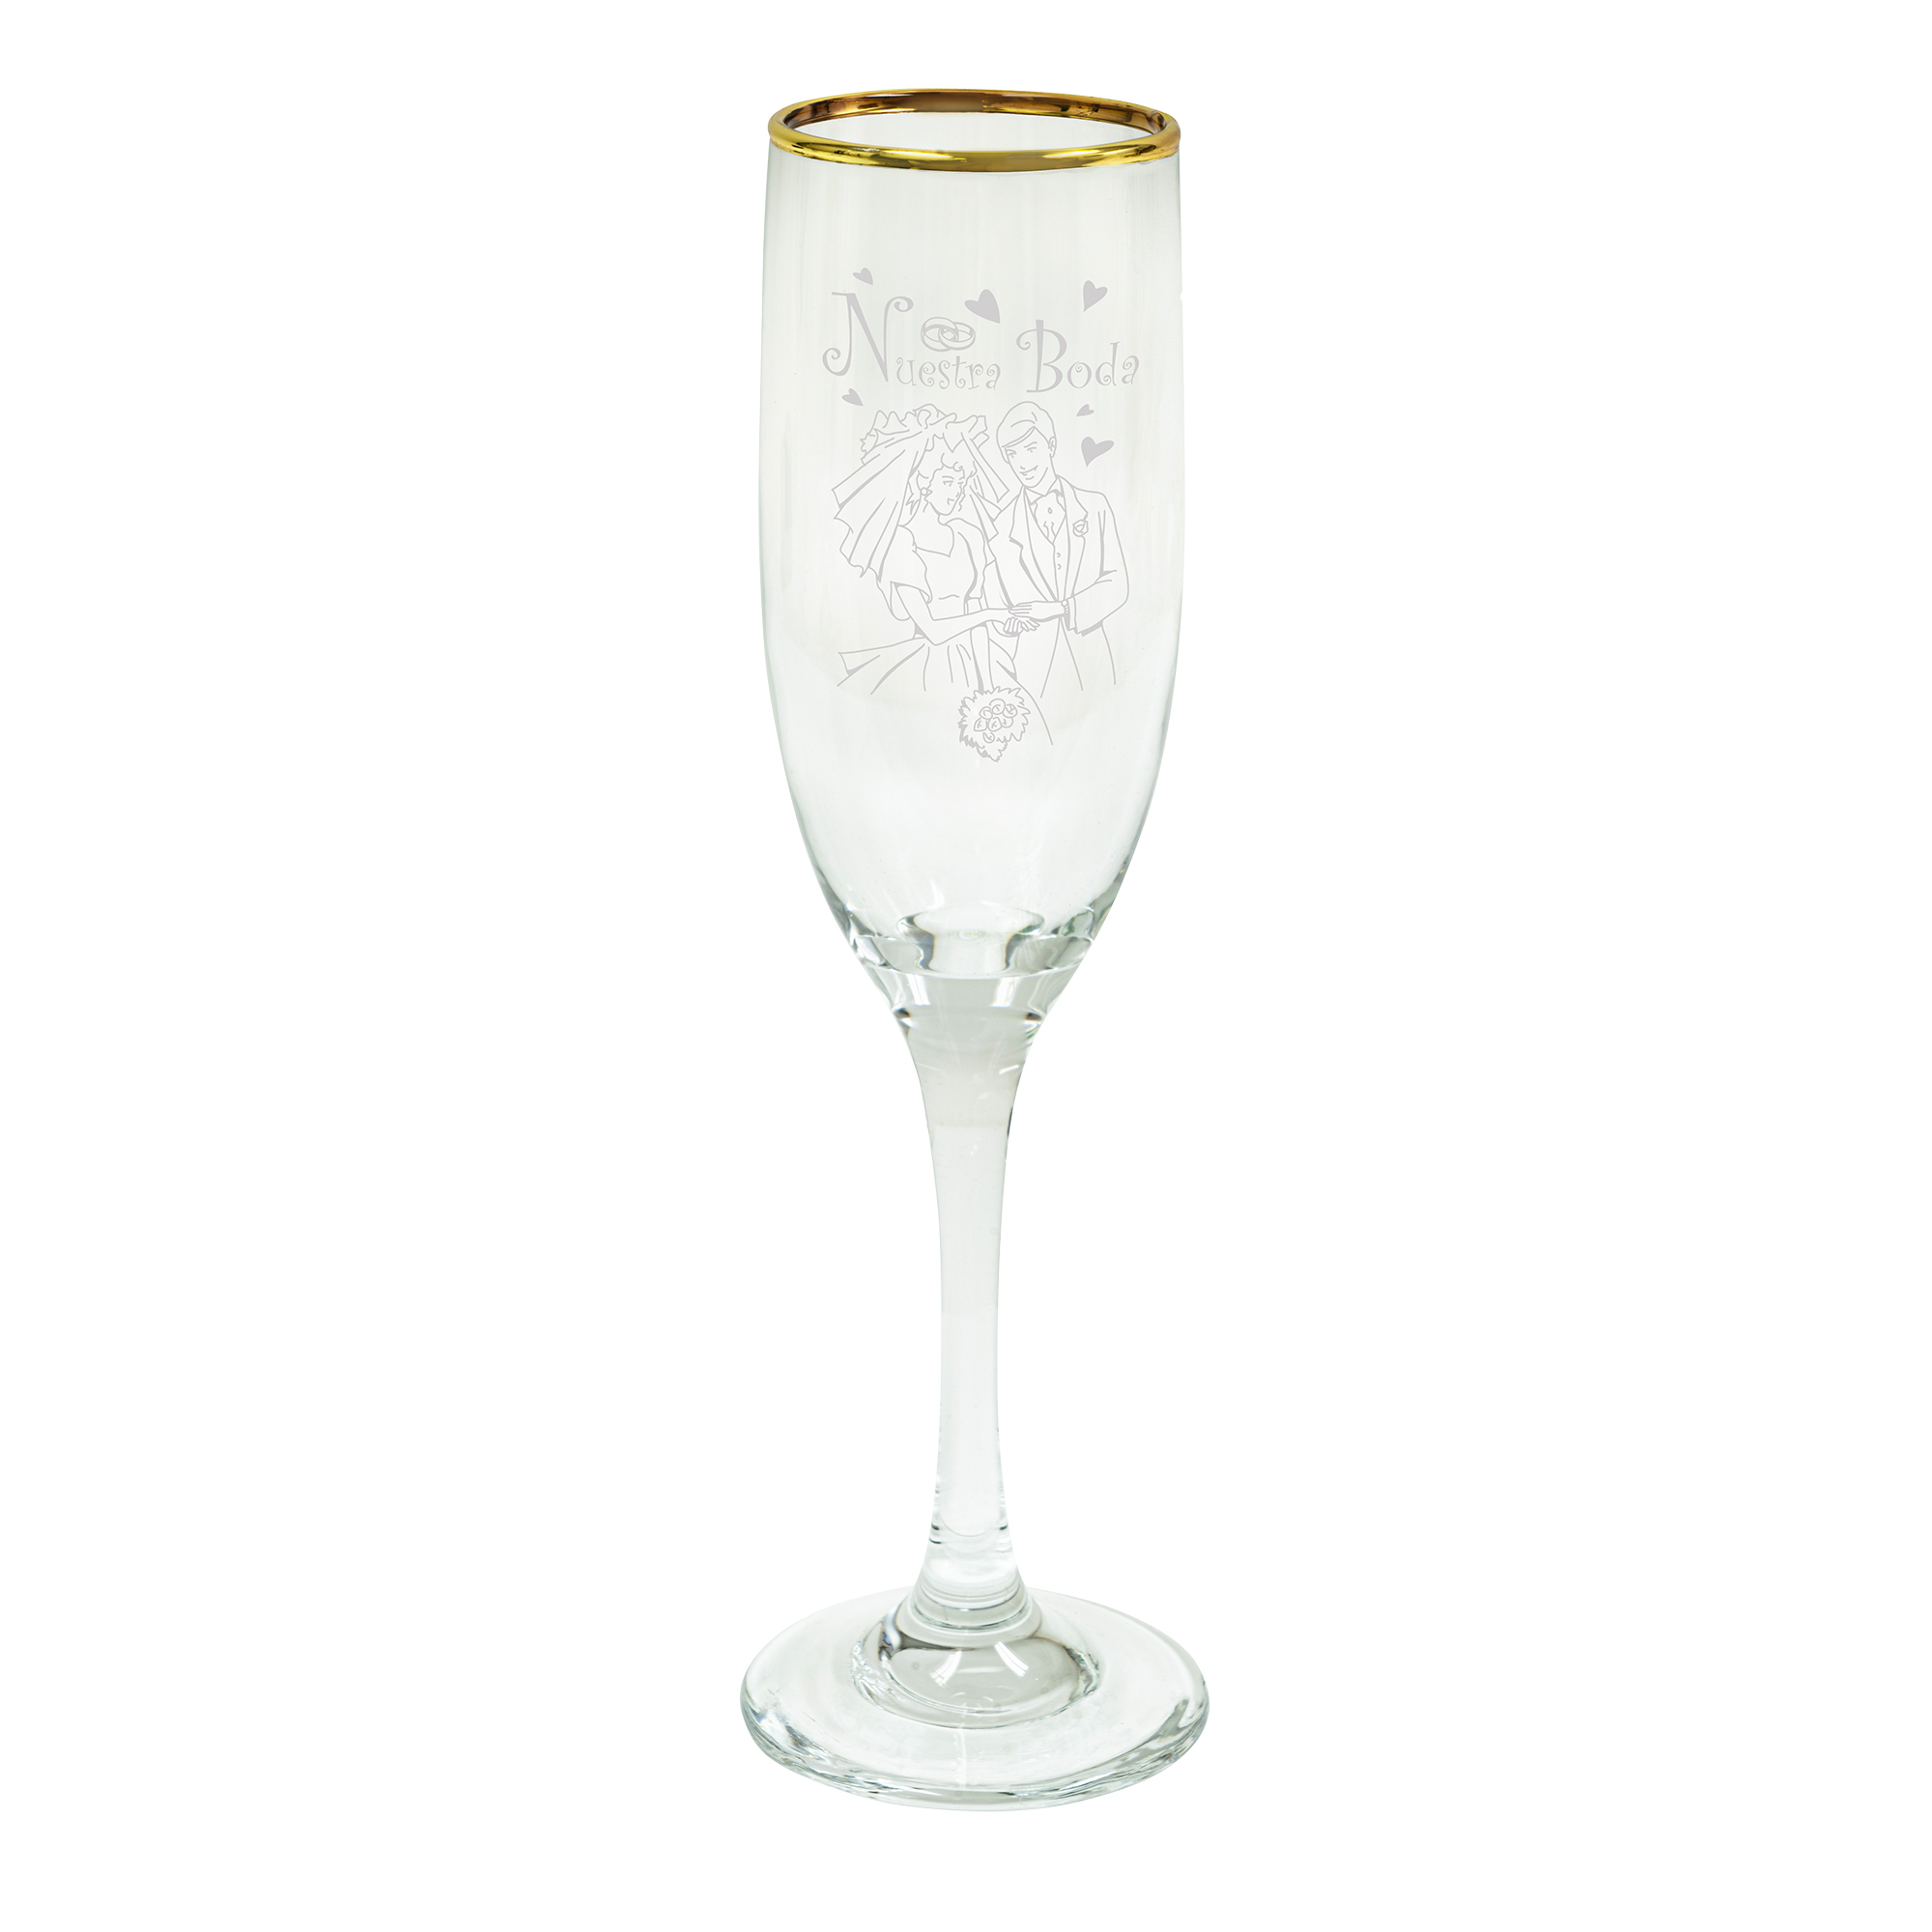 Glass Champagne Flutes Gold Rim- "Nuestra Boda" Set of 6pcs